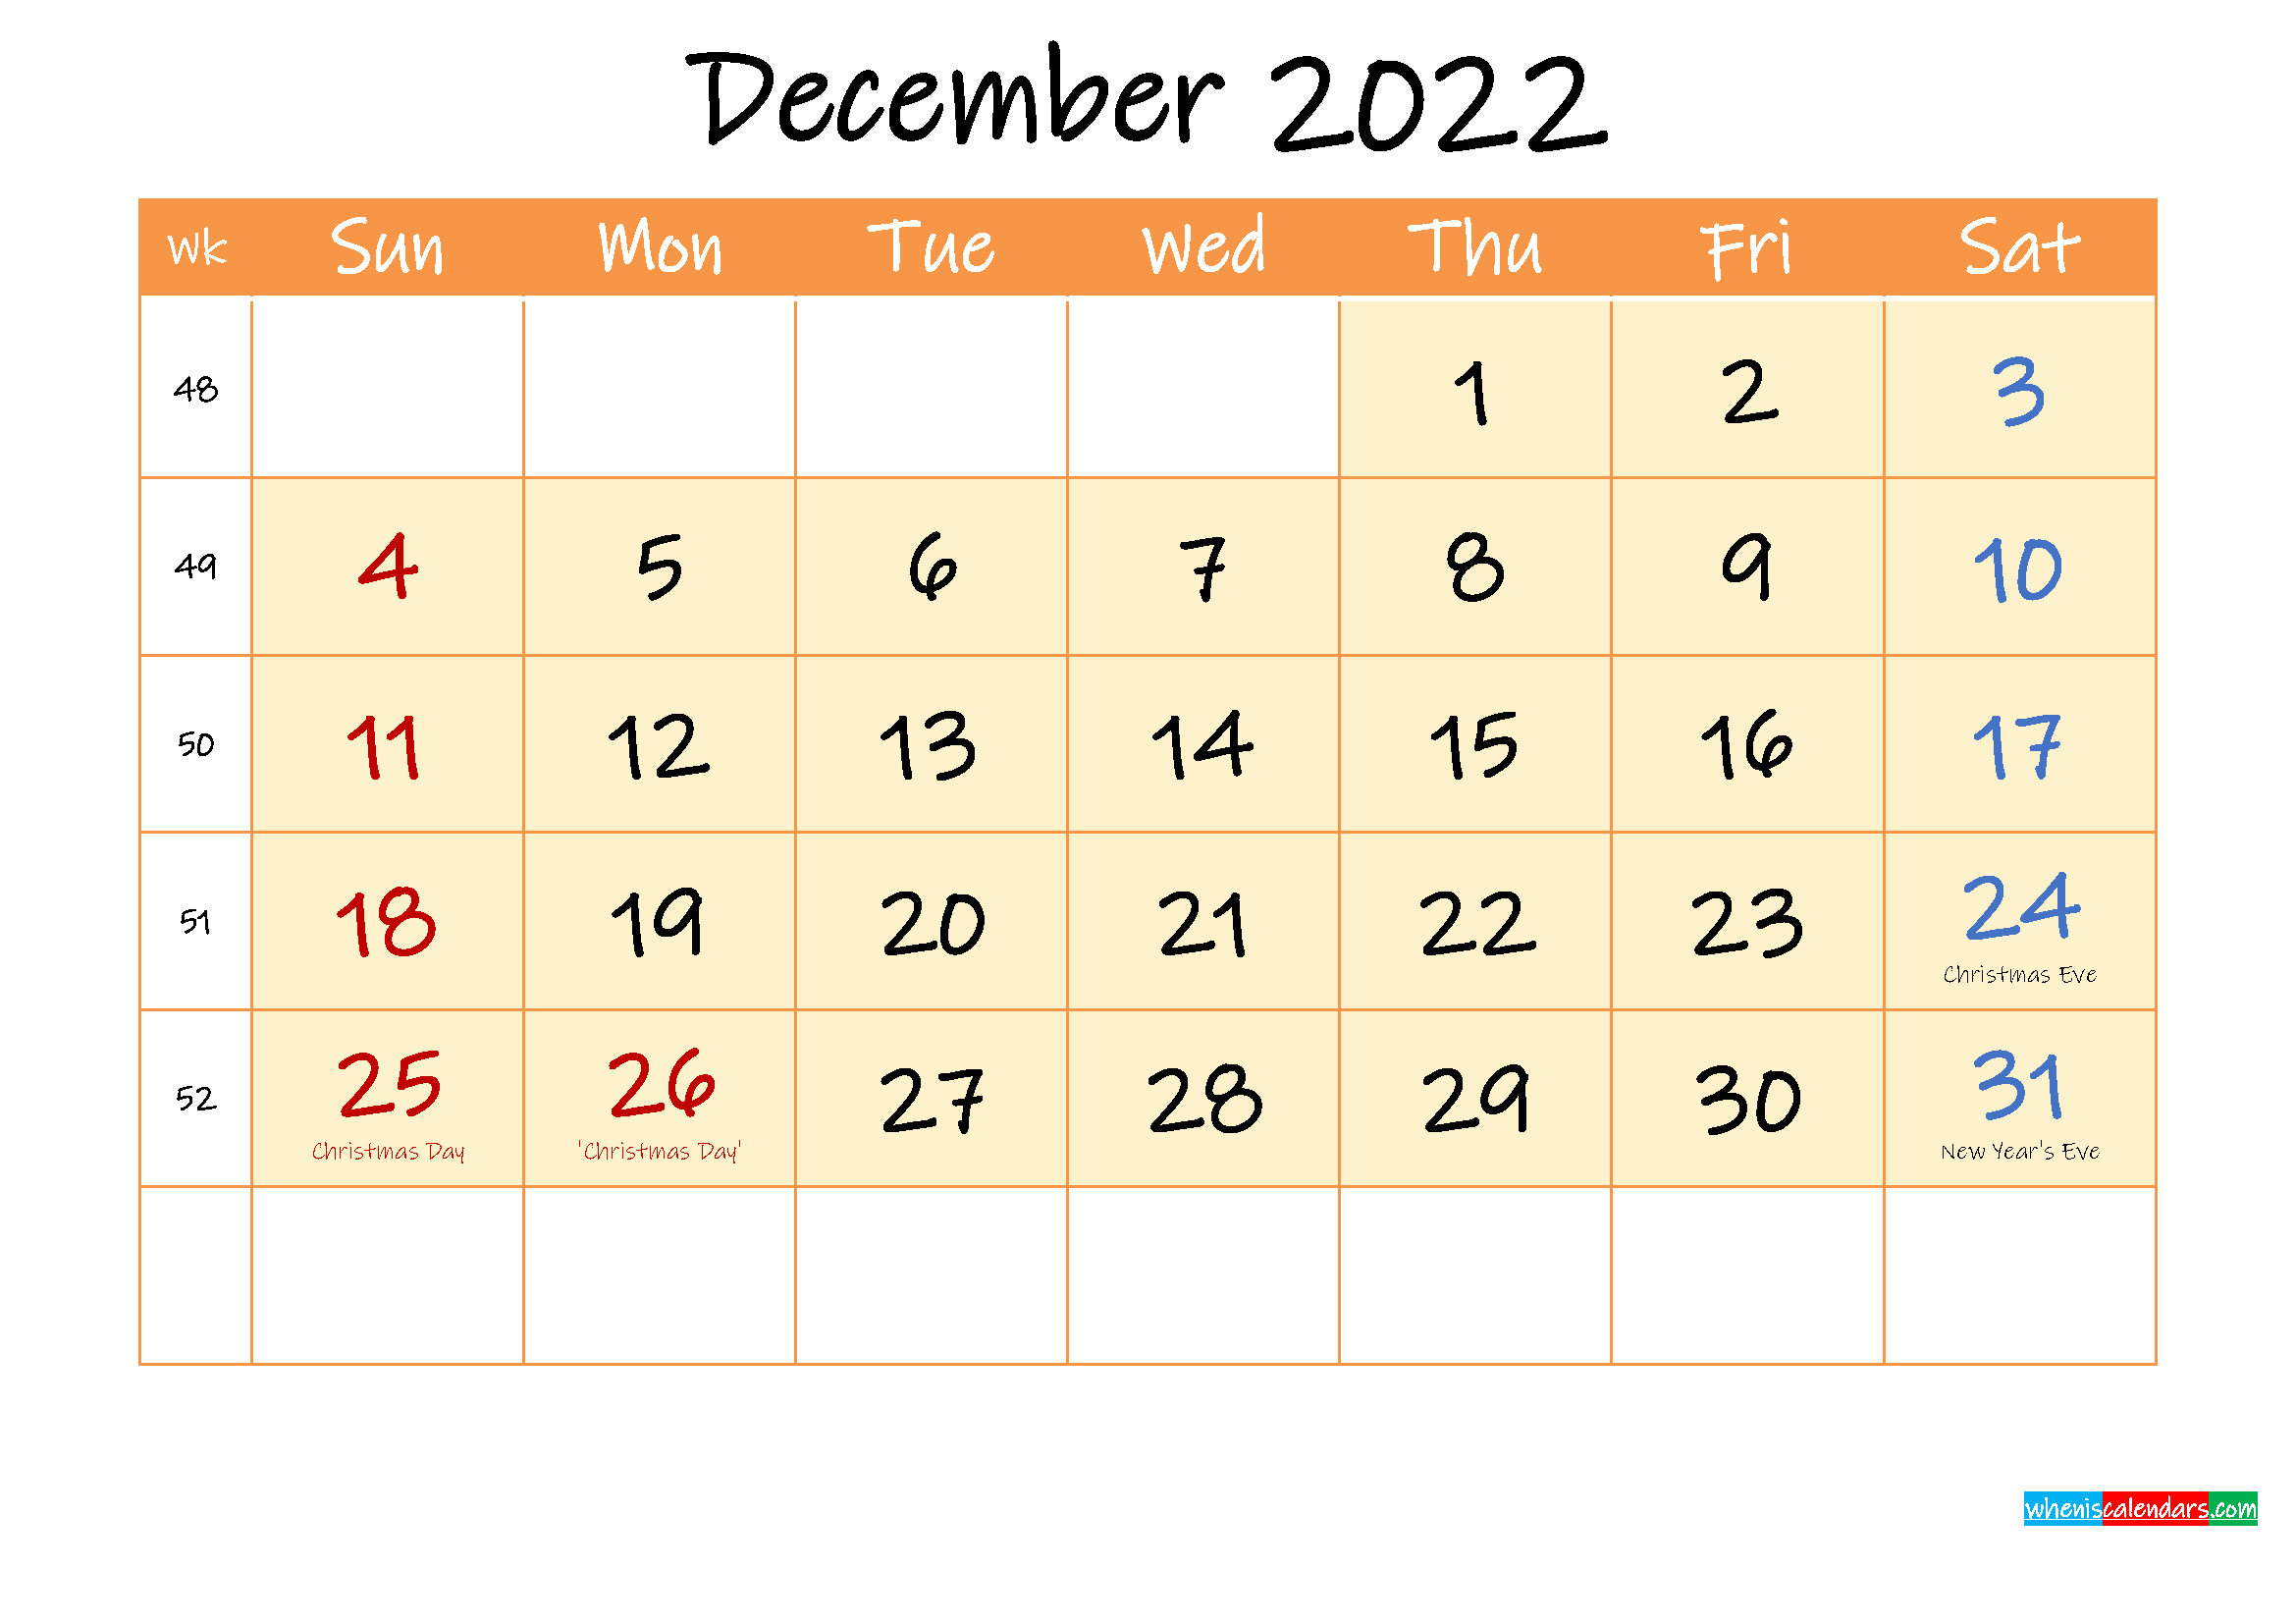 December 2022 Free Printable Calendar - Template Ink22M168